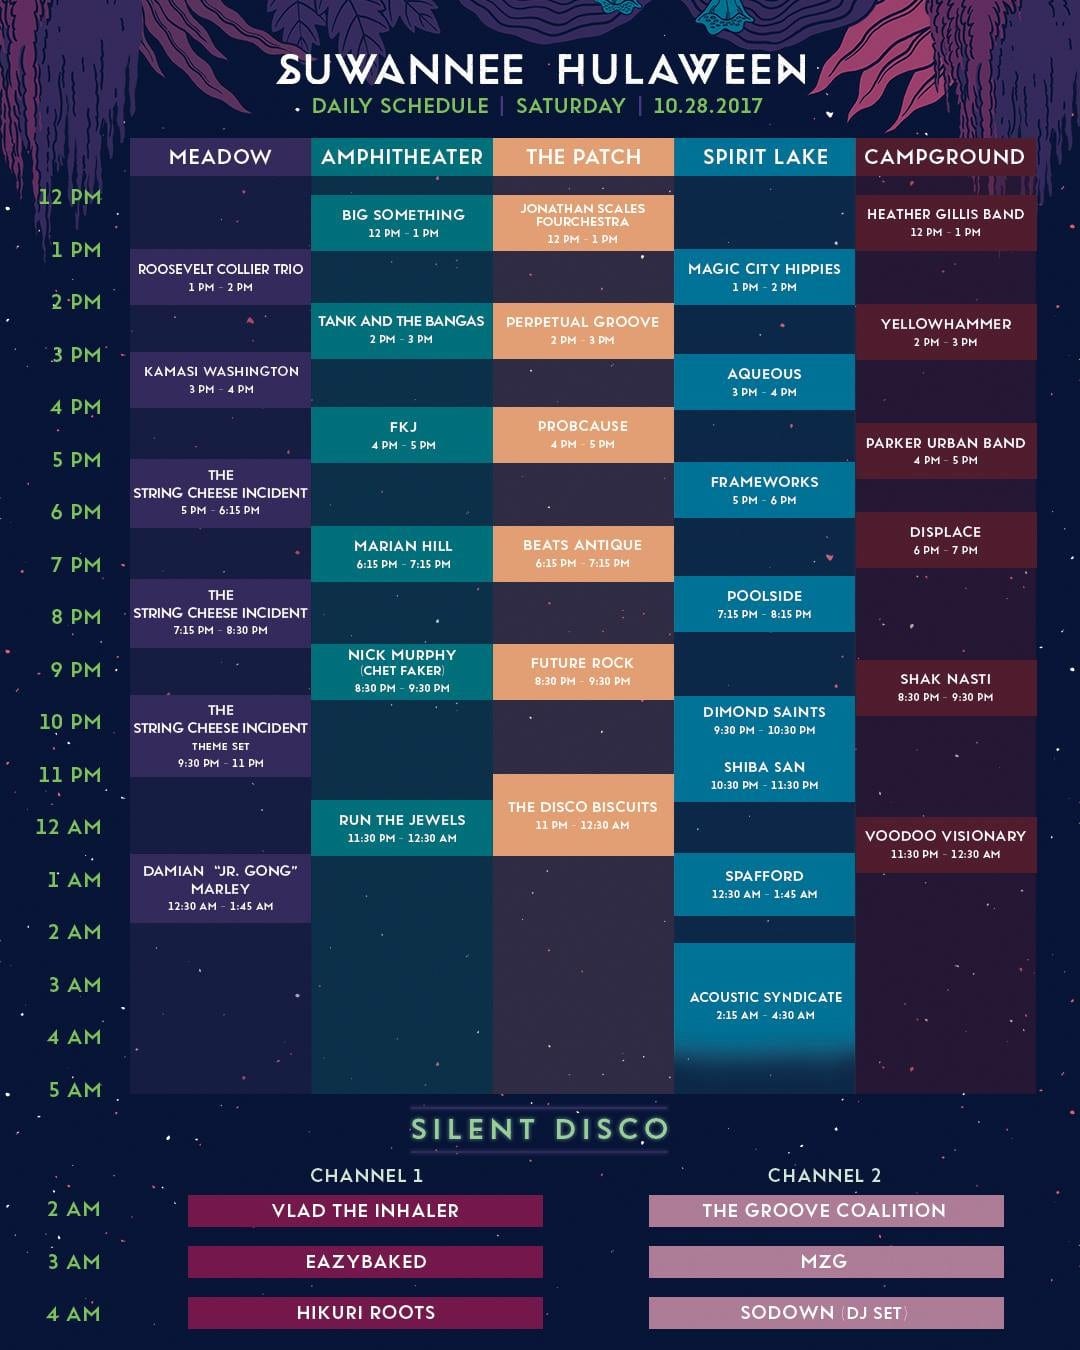 Suwannee Hulaween 2017 Schedule Is Here! • MUSICFESTNEWS